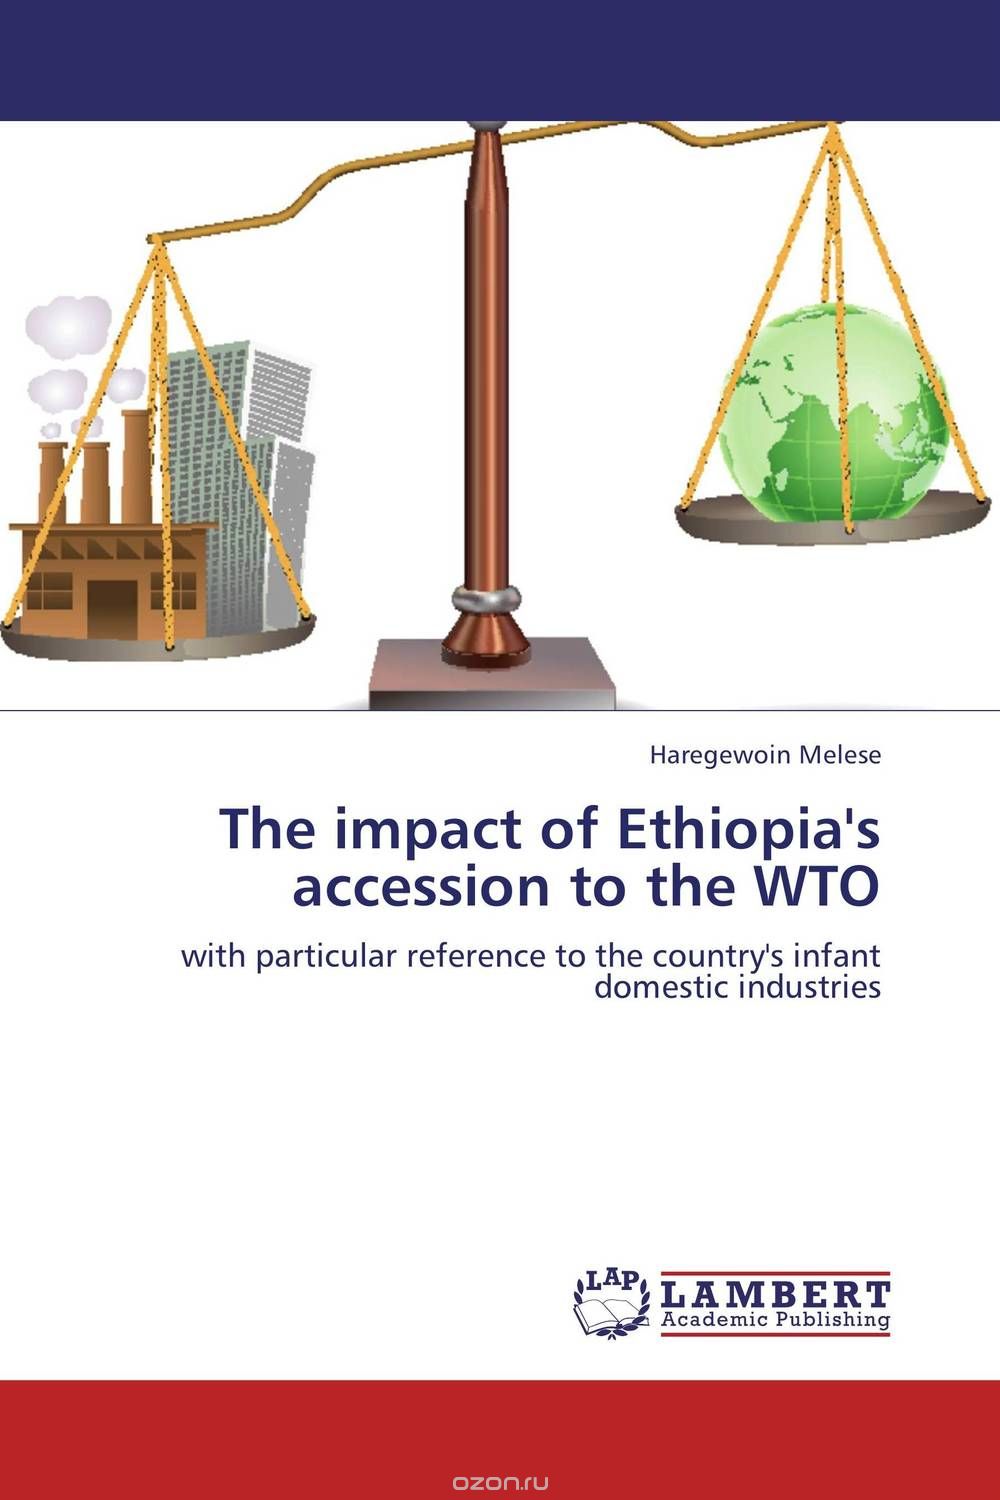 Скачать книгу "The impact of Ethiopia's accession to the WTO"